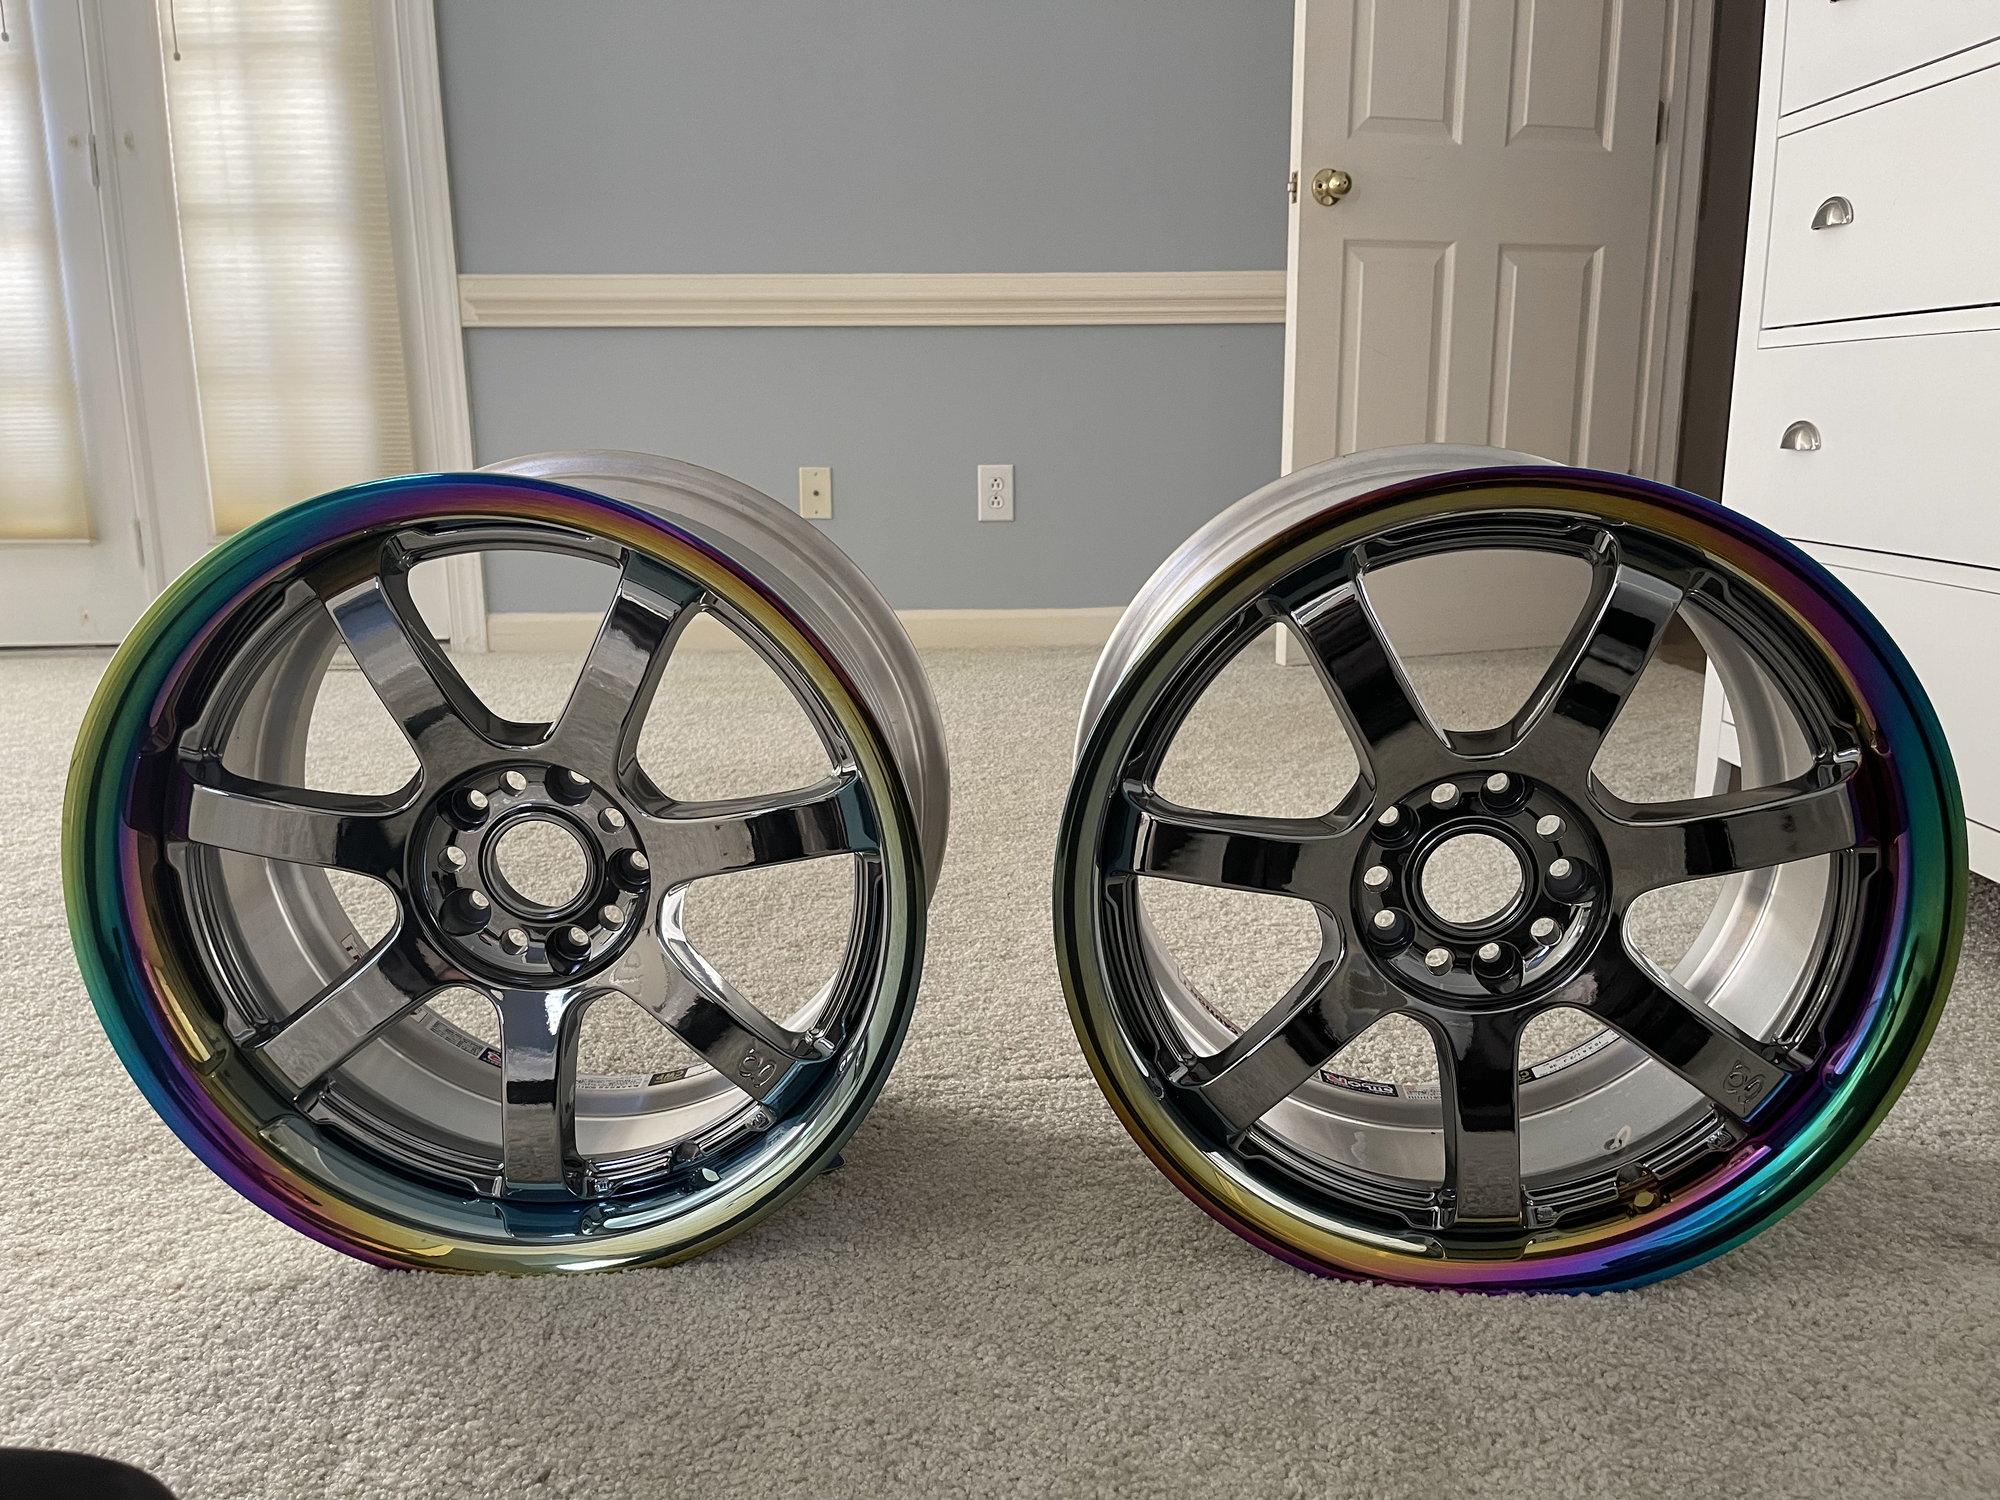 Wheels and Tires/Axles - Gram Light 57S Pro w/ Burnt Titanium Lip - New - 0  All Models - Trent Woods/new Bern, NC 28562, United States